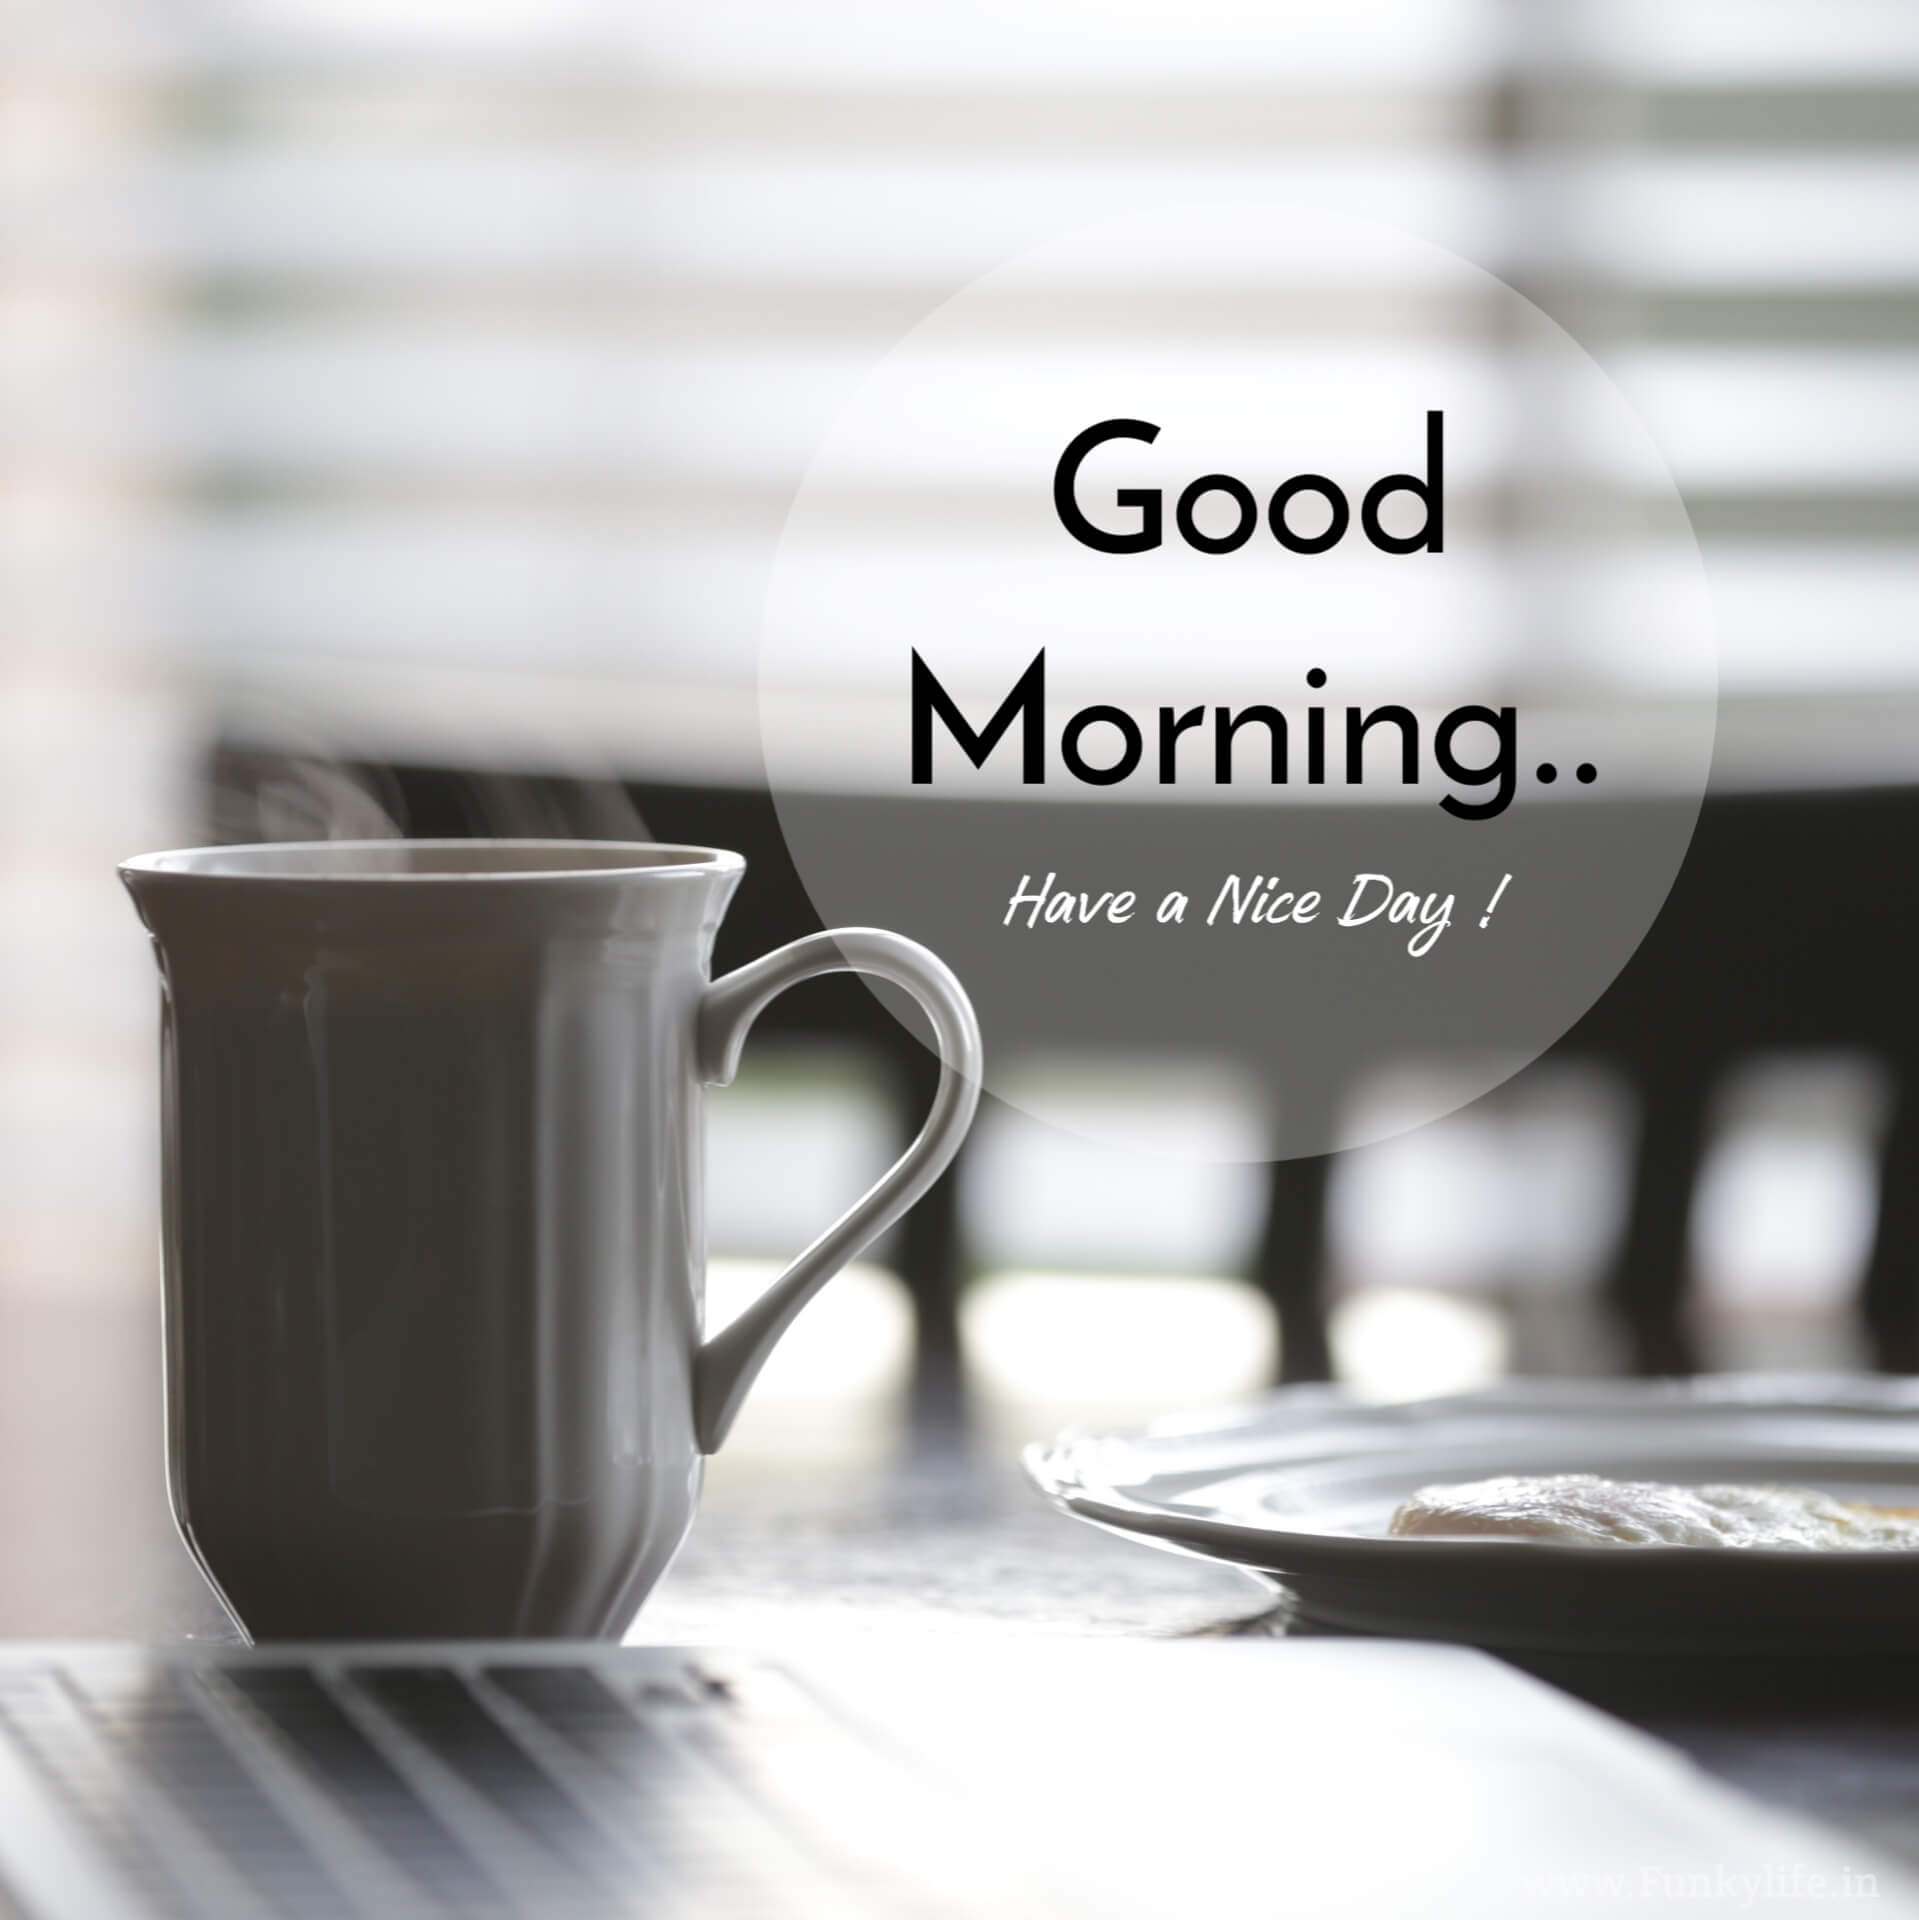 Hot Coffee Mug Good Morning Images